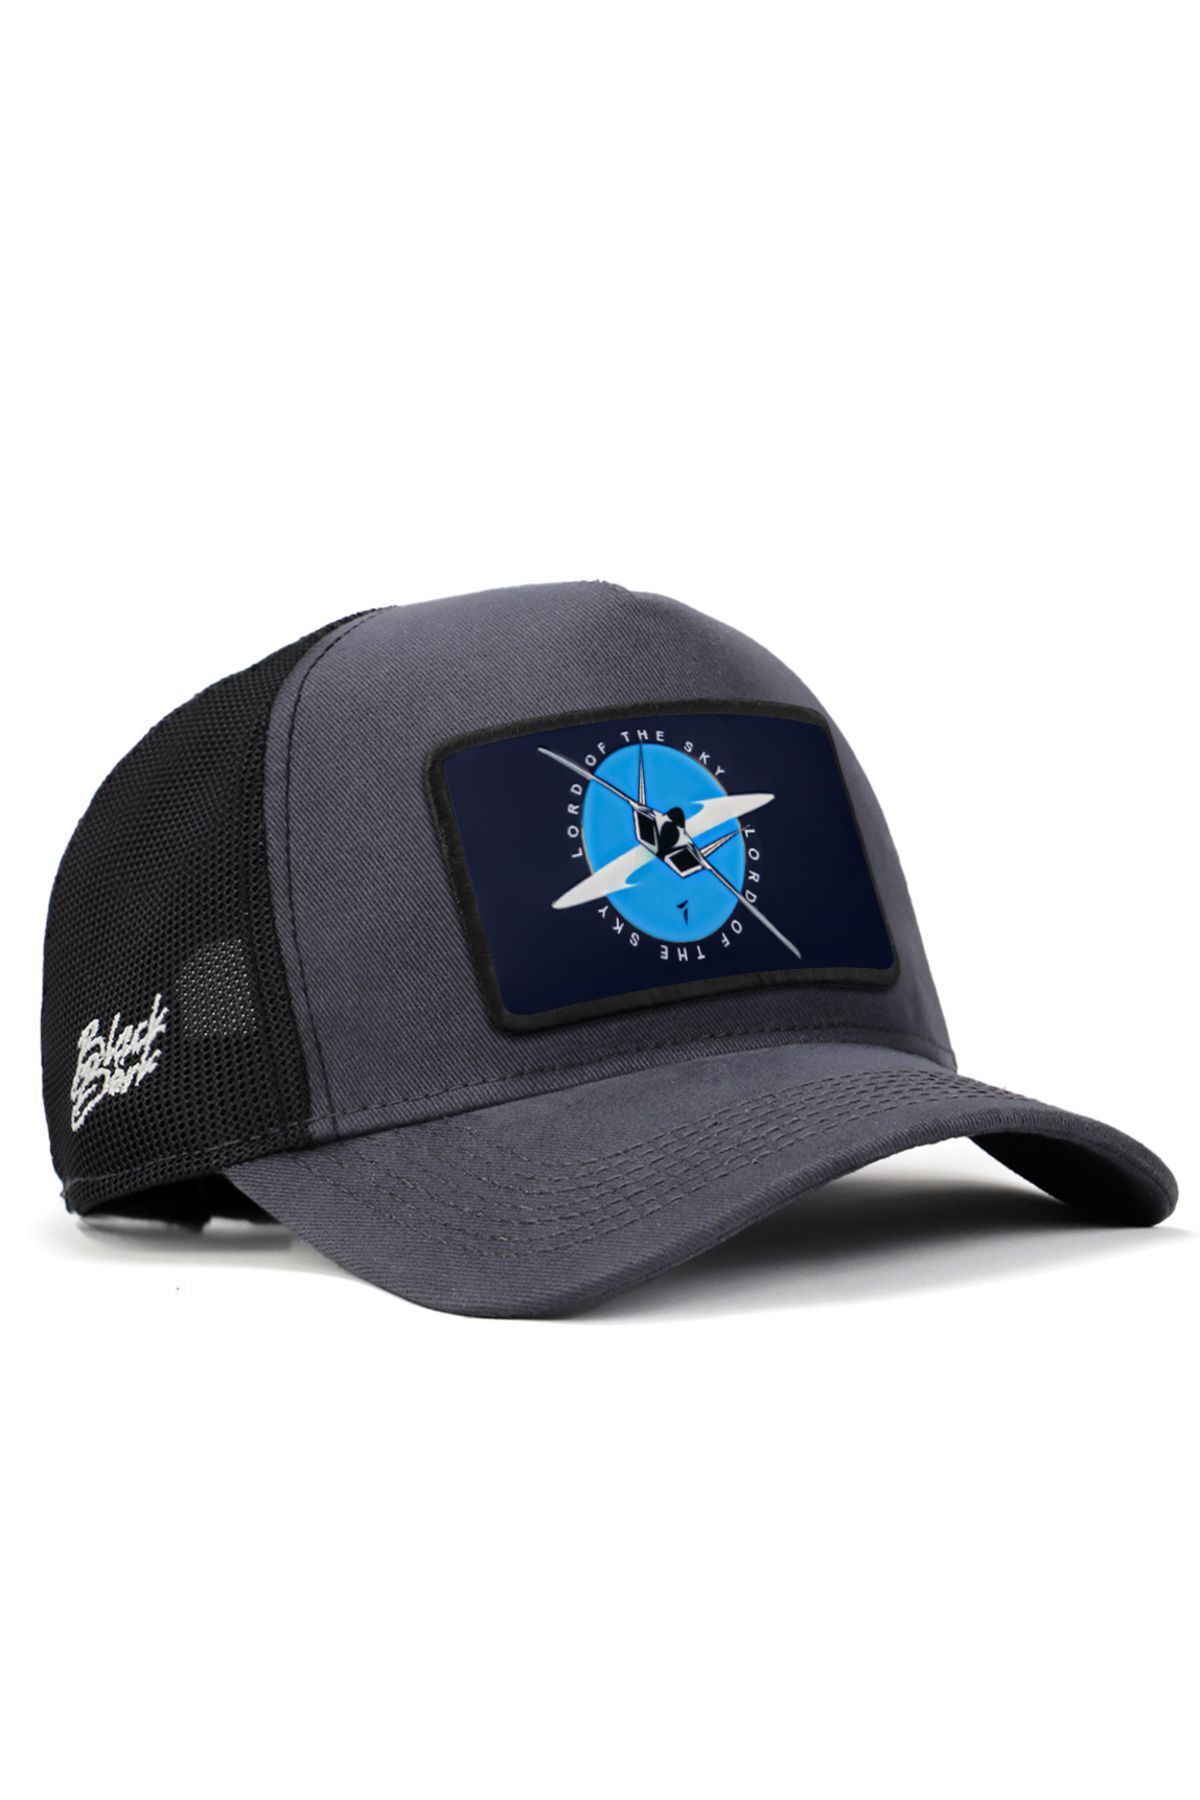 BlackBörk V2 Trucker Gökyüzünün Efendisi Kaan Lisanlı Antrasit-siyah Şapka